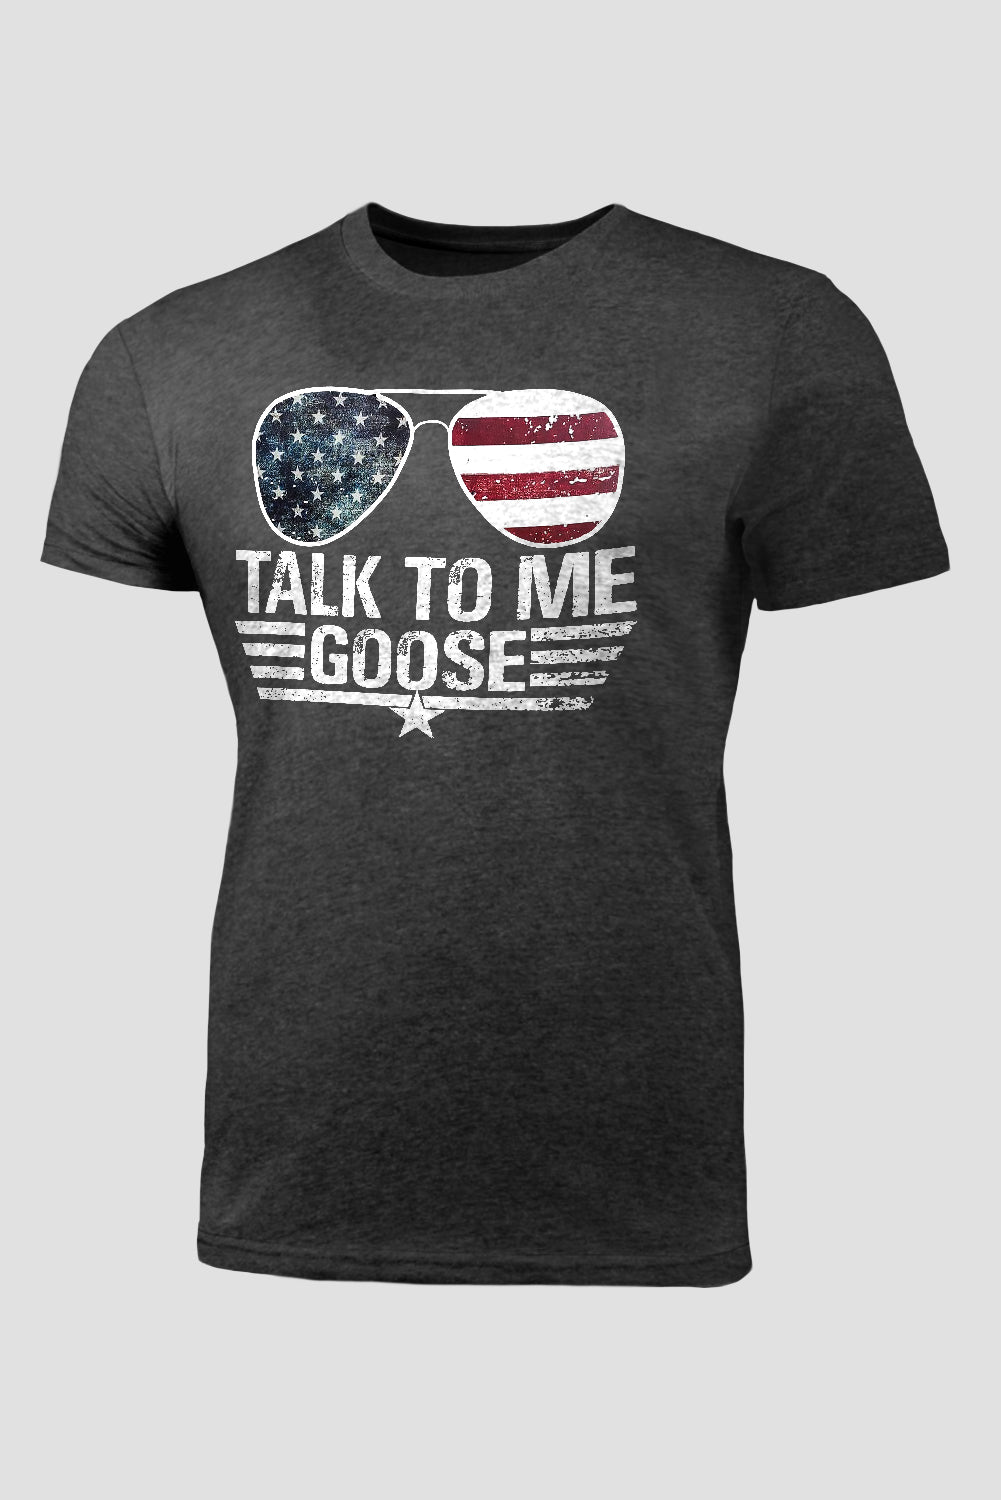 Dark Gray Talk To Me Goose American Flag Graphic Print Men's T Shirt Gray 62%Polyester+32%Cotton+6%Elastane Men's Tops JT's Designer Fashion